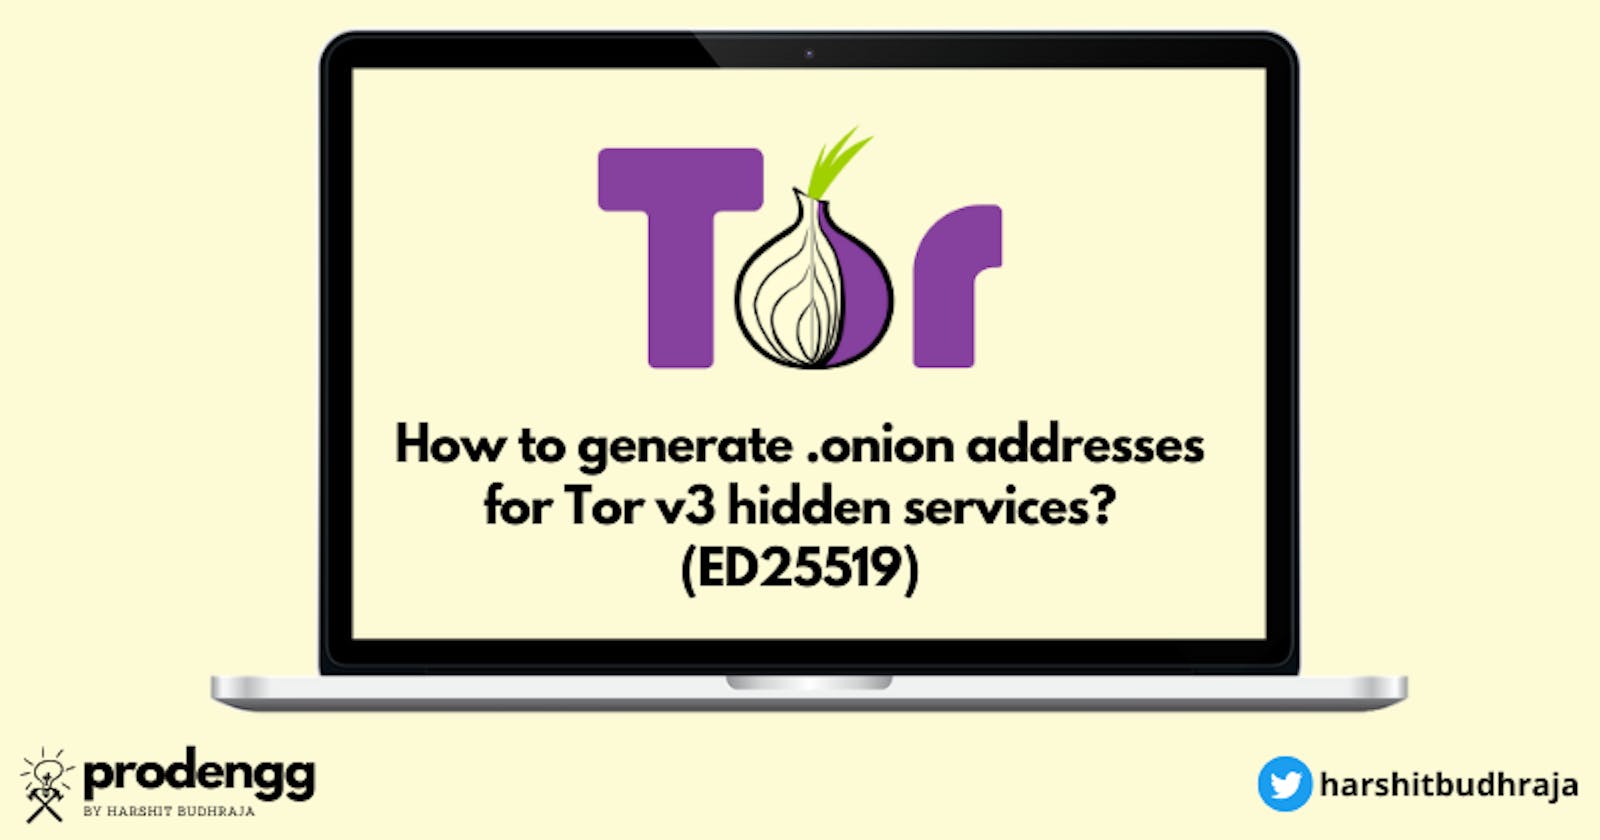 Generating vanity .onion addresses for Tor v3 (ED25519) hidden services